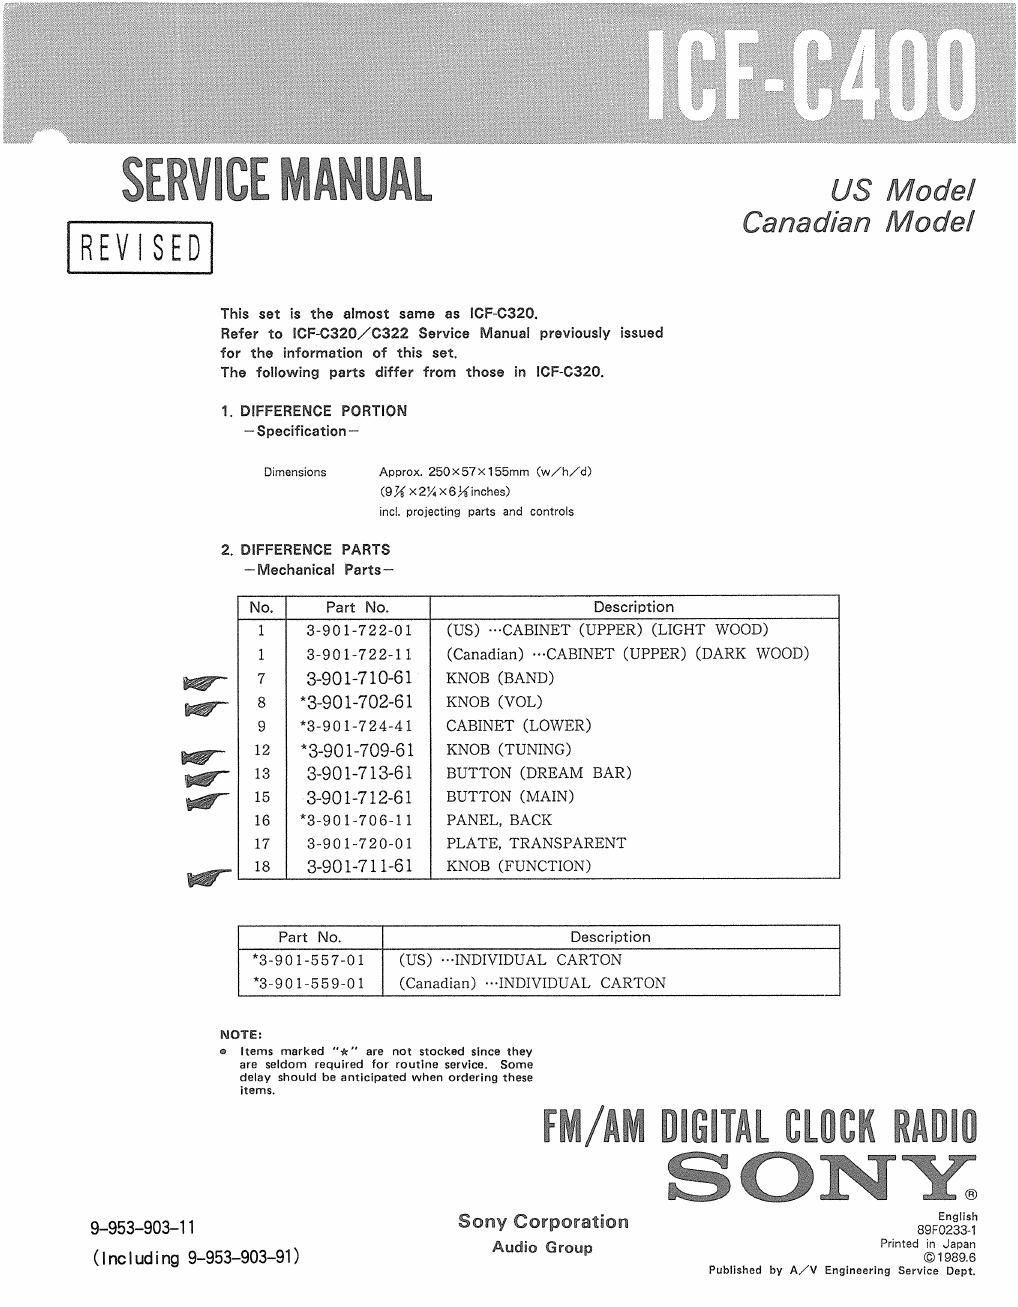 sony icf c 400 service manual